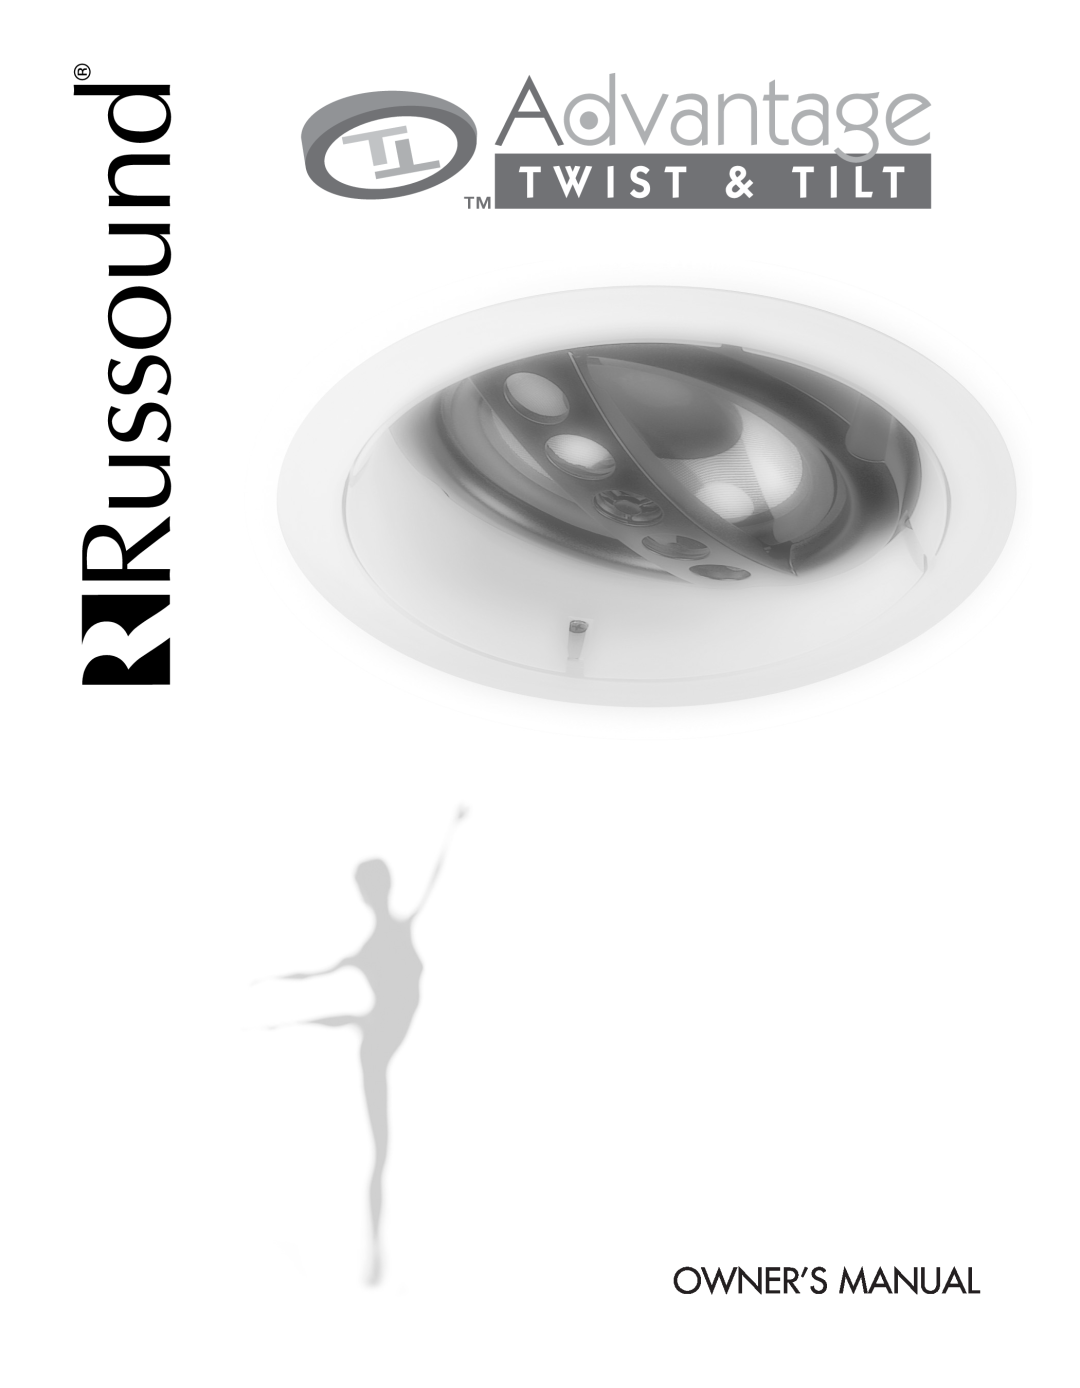 Russound In-Ceiling speaker owner manual Advantage, T W I S T & T I L T 